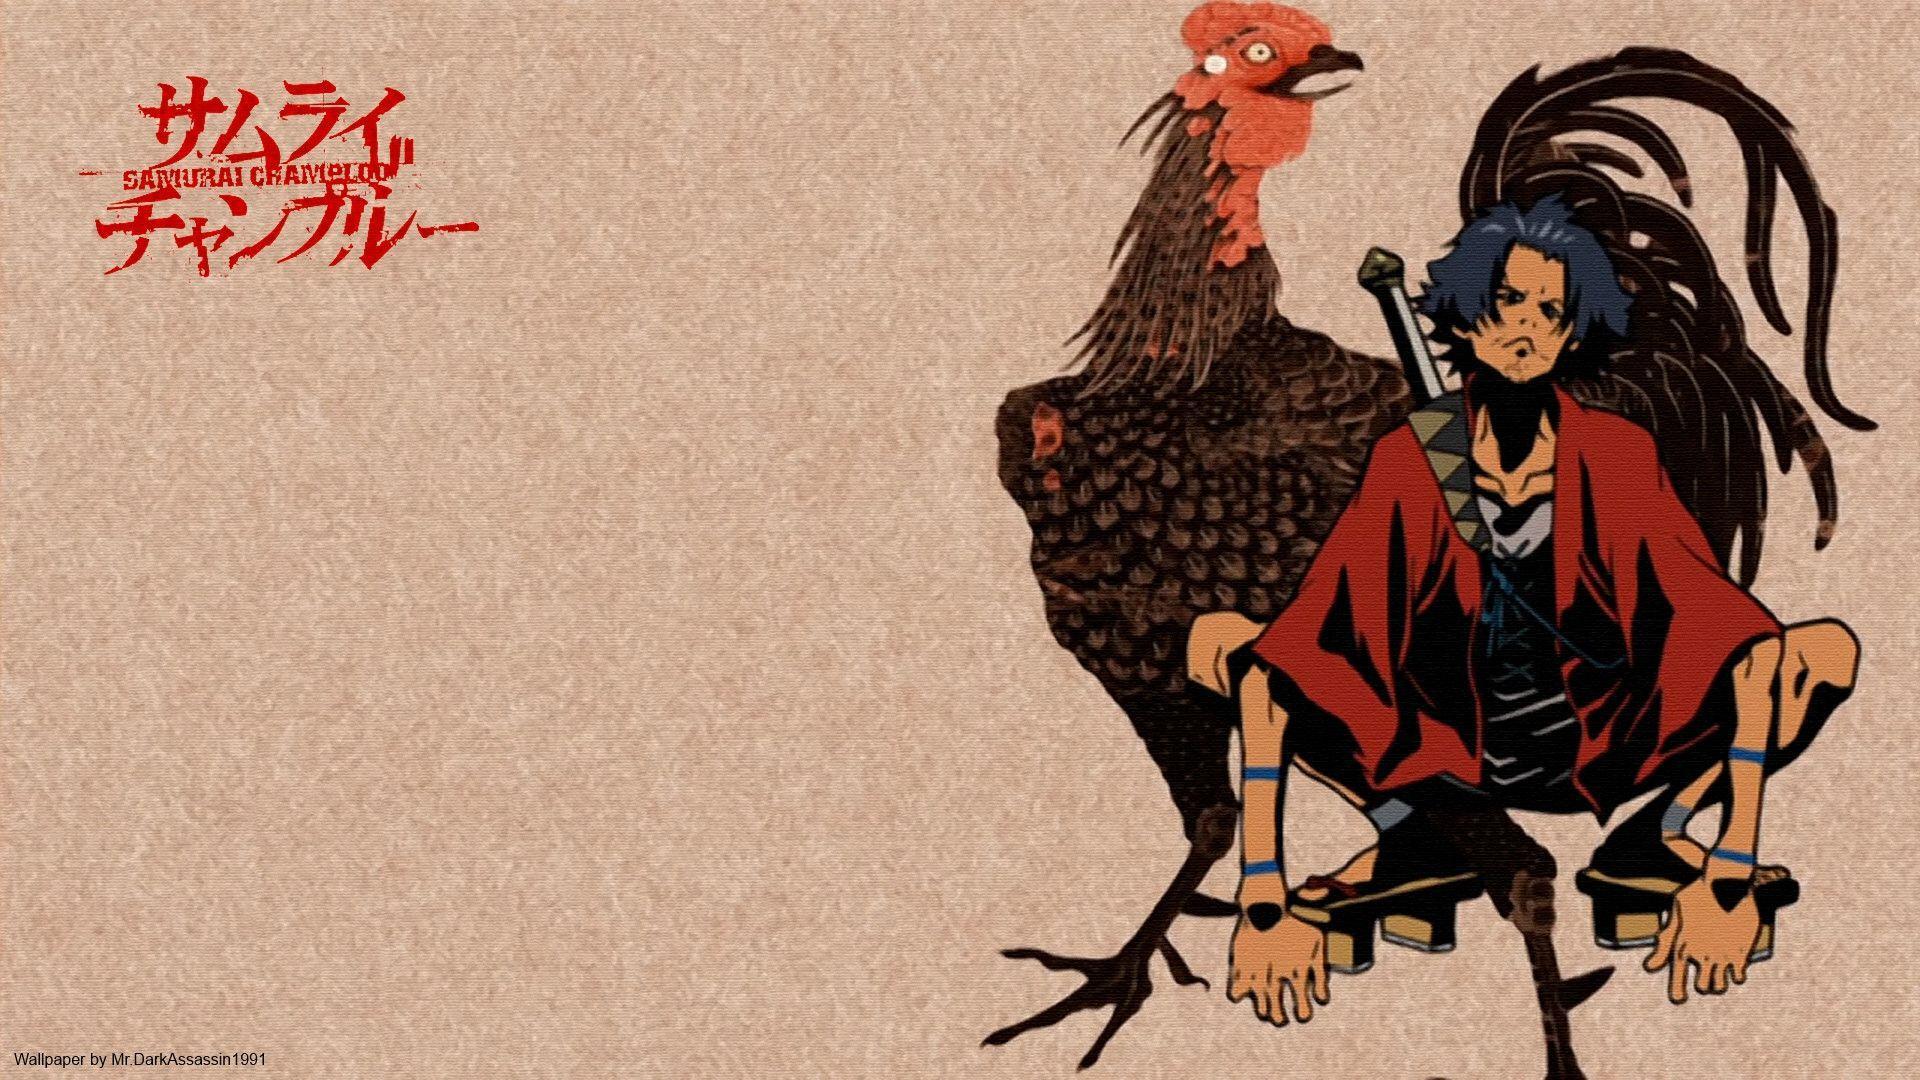 Download wallpaper samurai champloo, Wandering Swordsman, Mugen